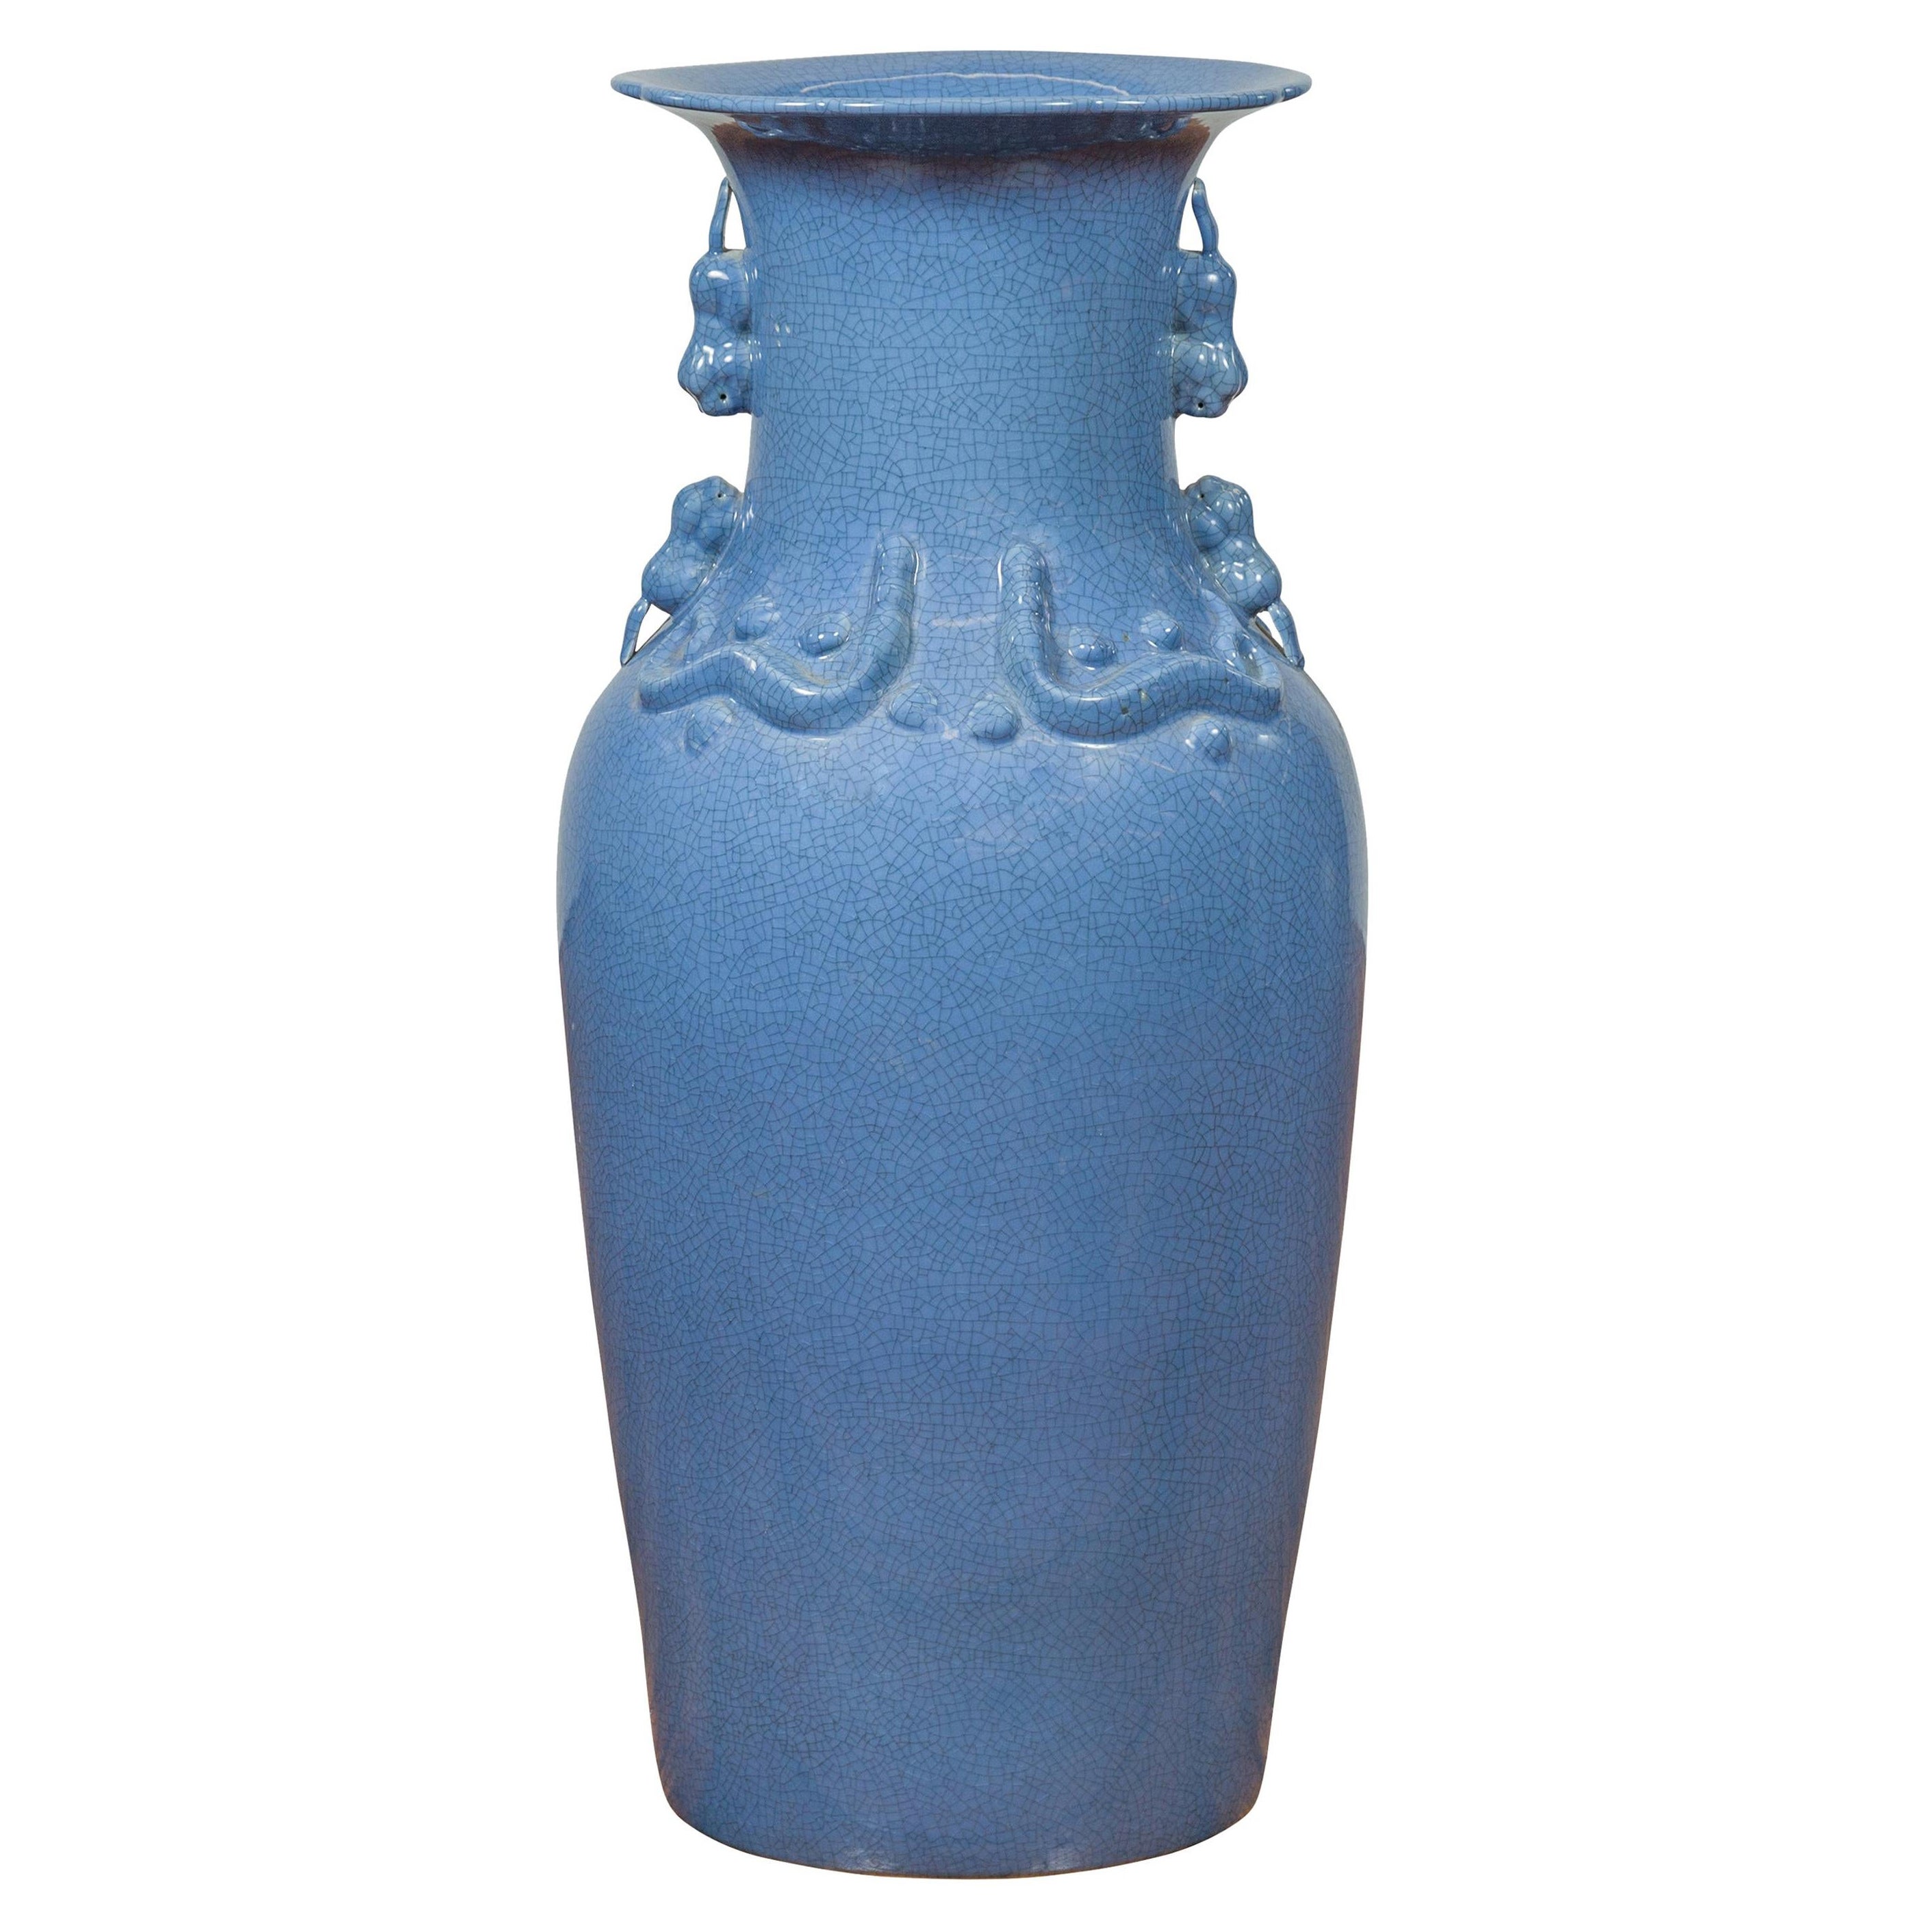 Ceremonial Altar Vase with Crackled Blue Glaze and Decorative Motifs